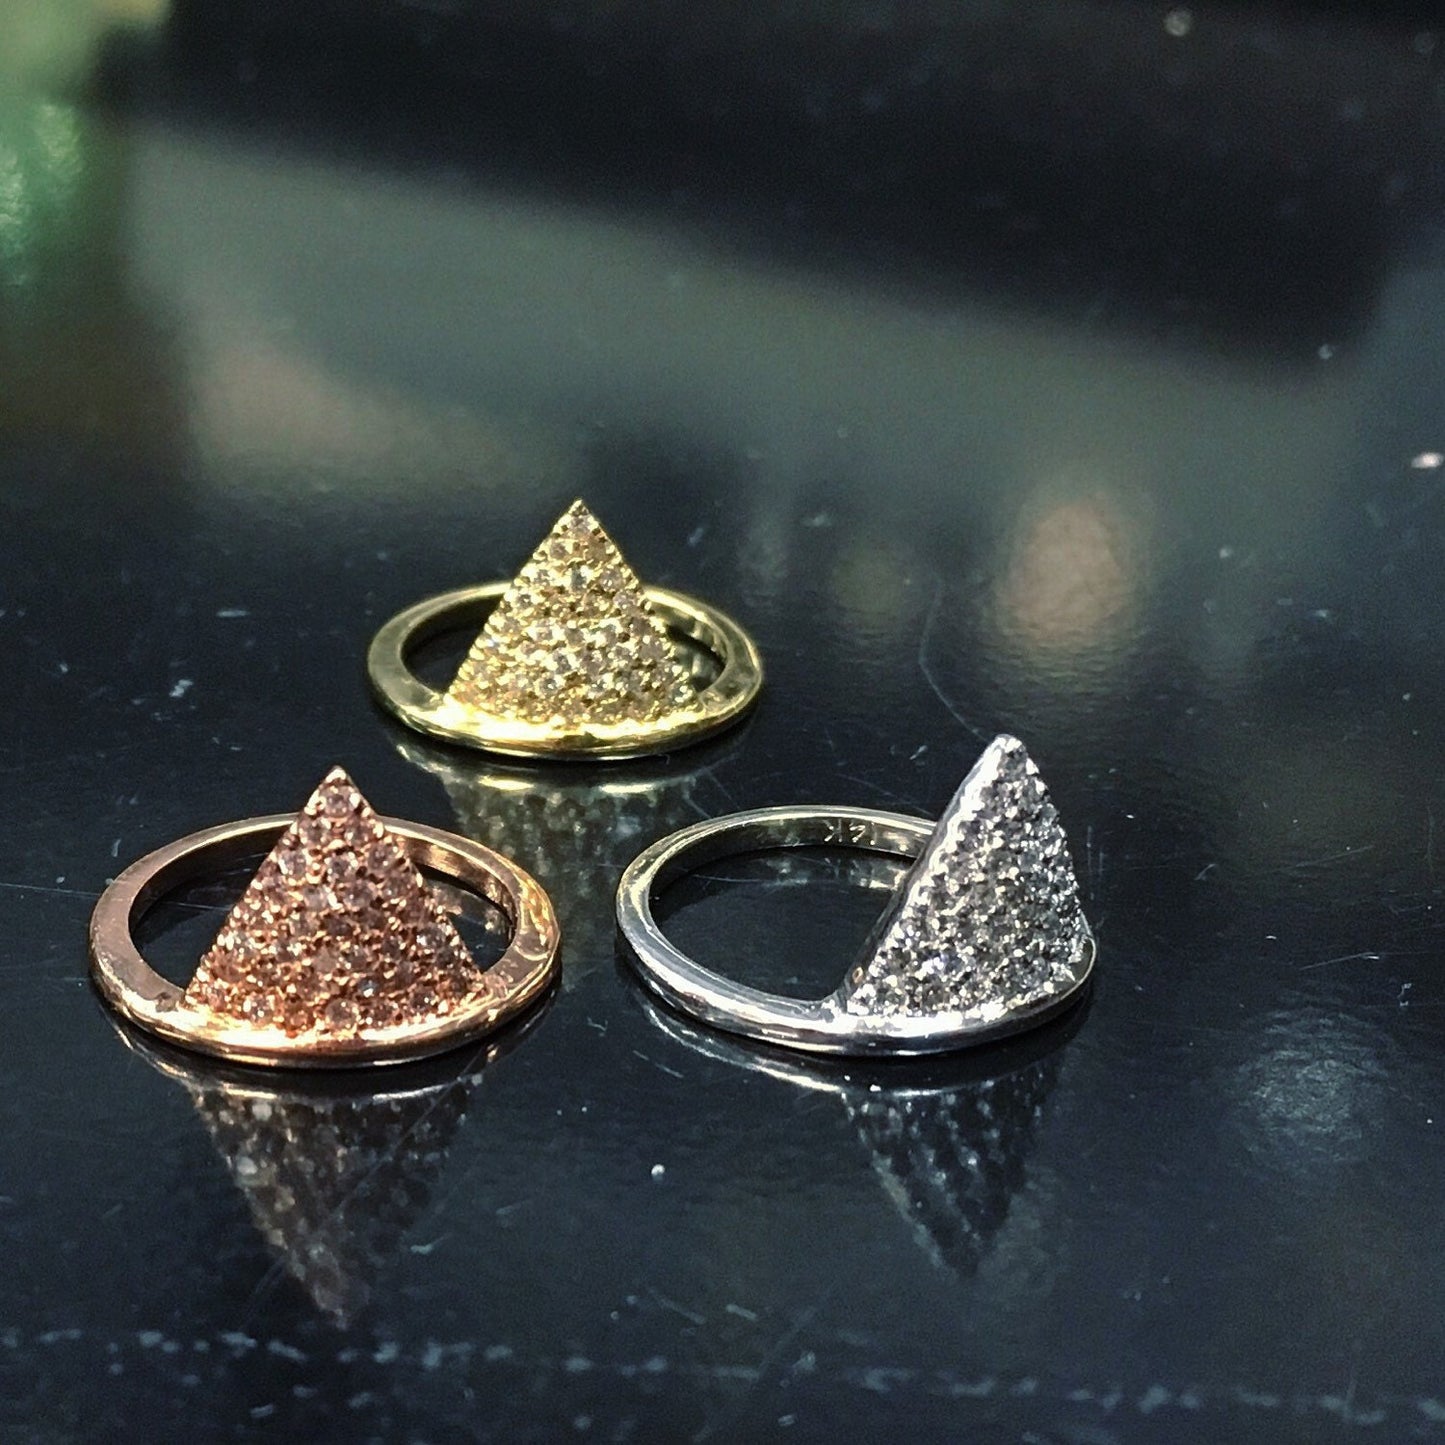 Diamond Spike Ring